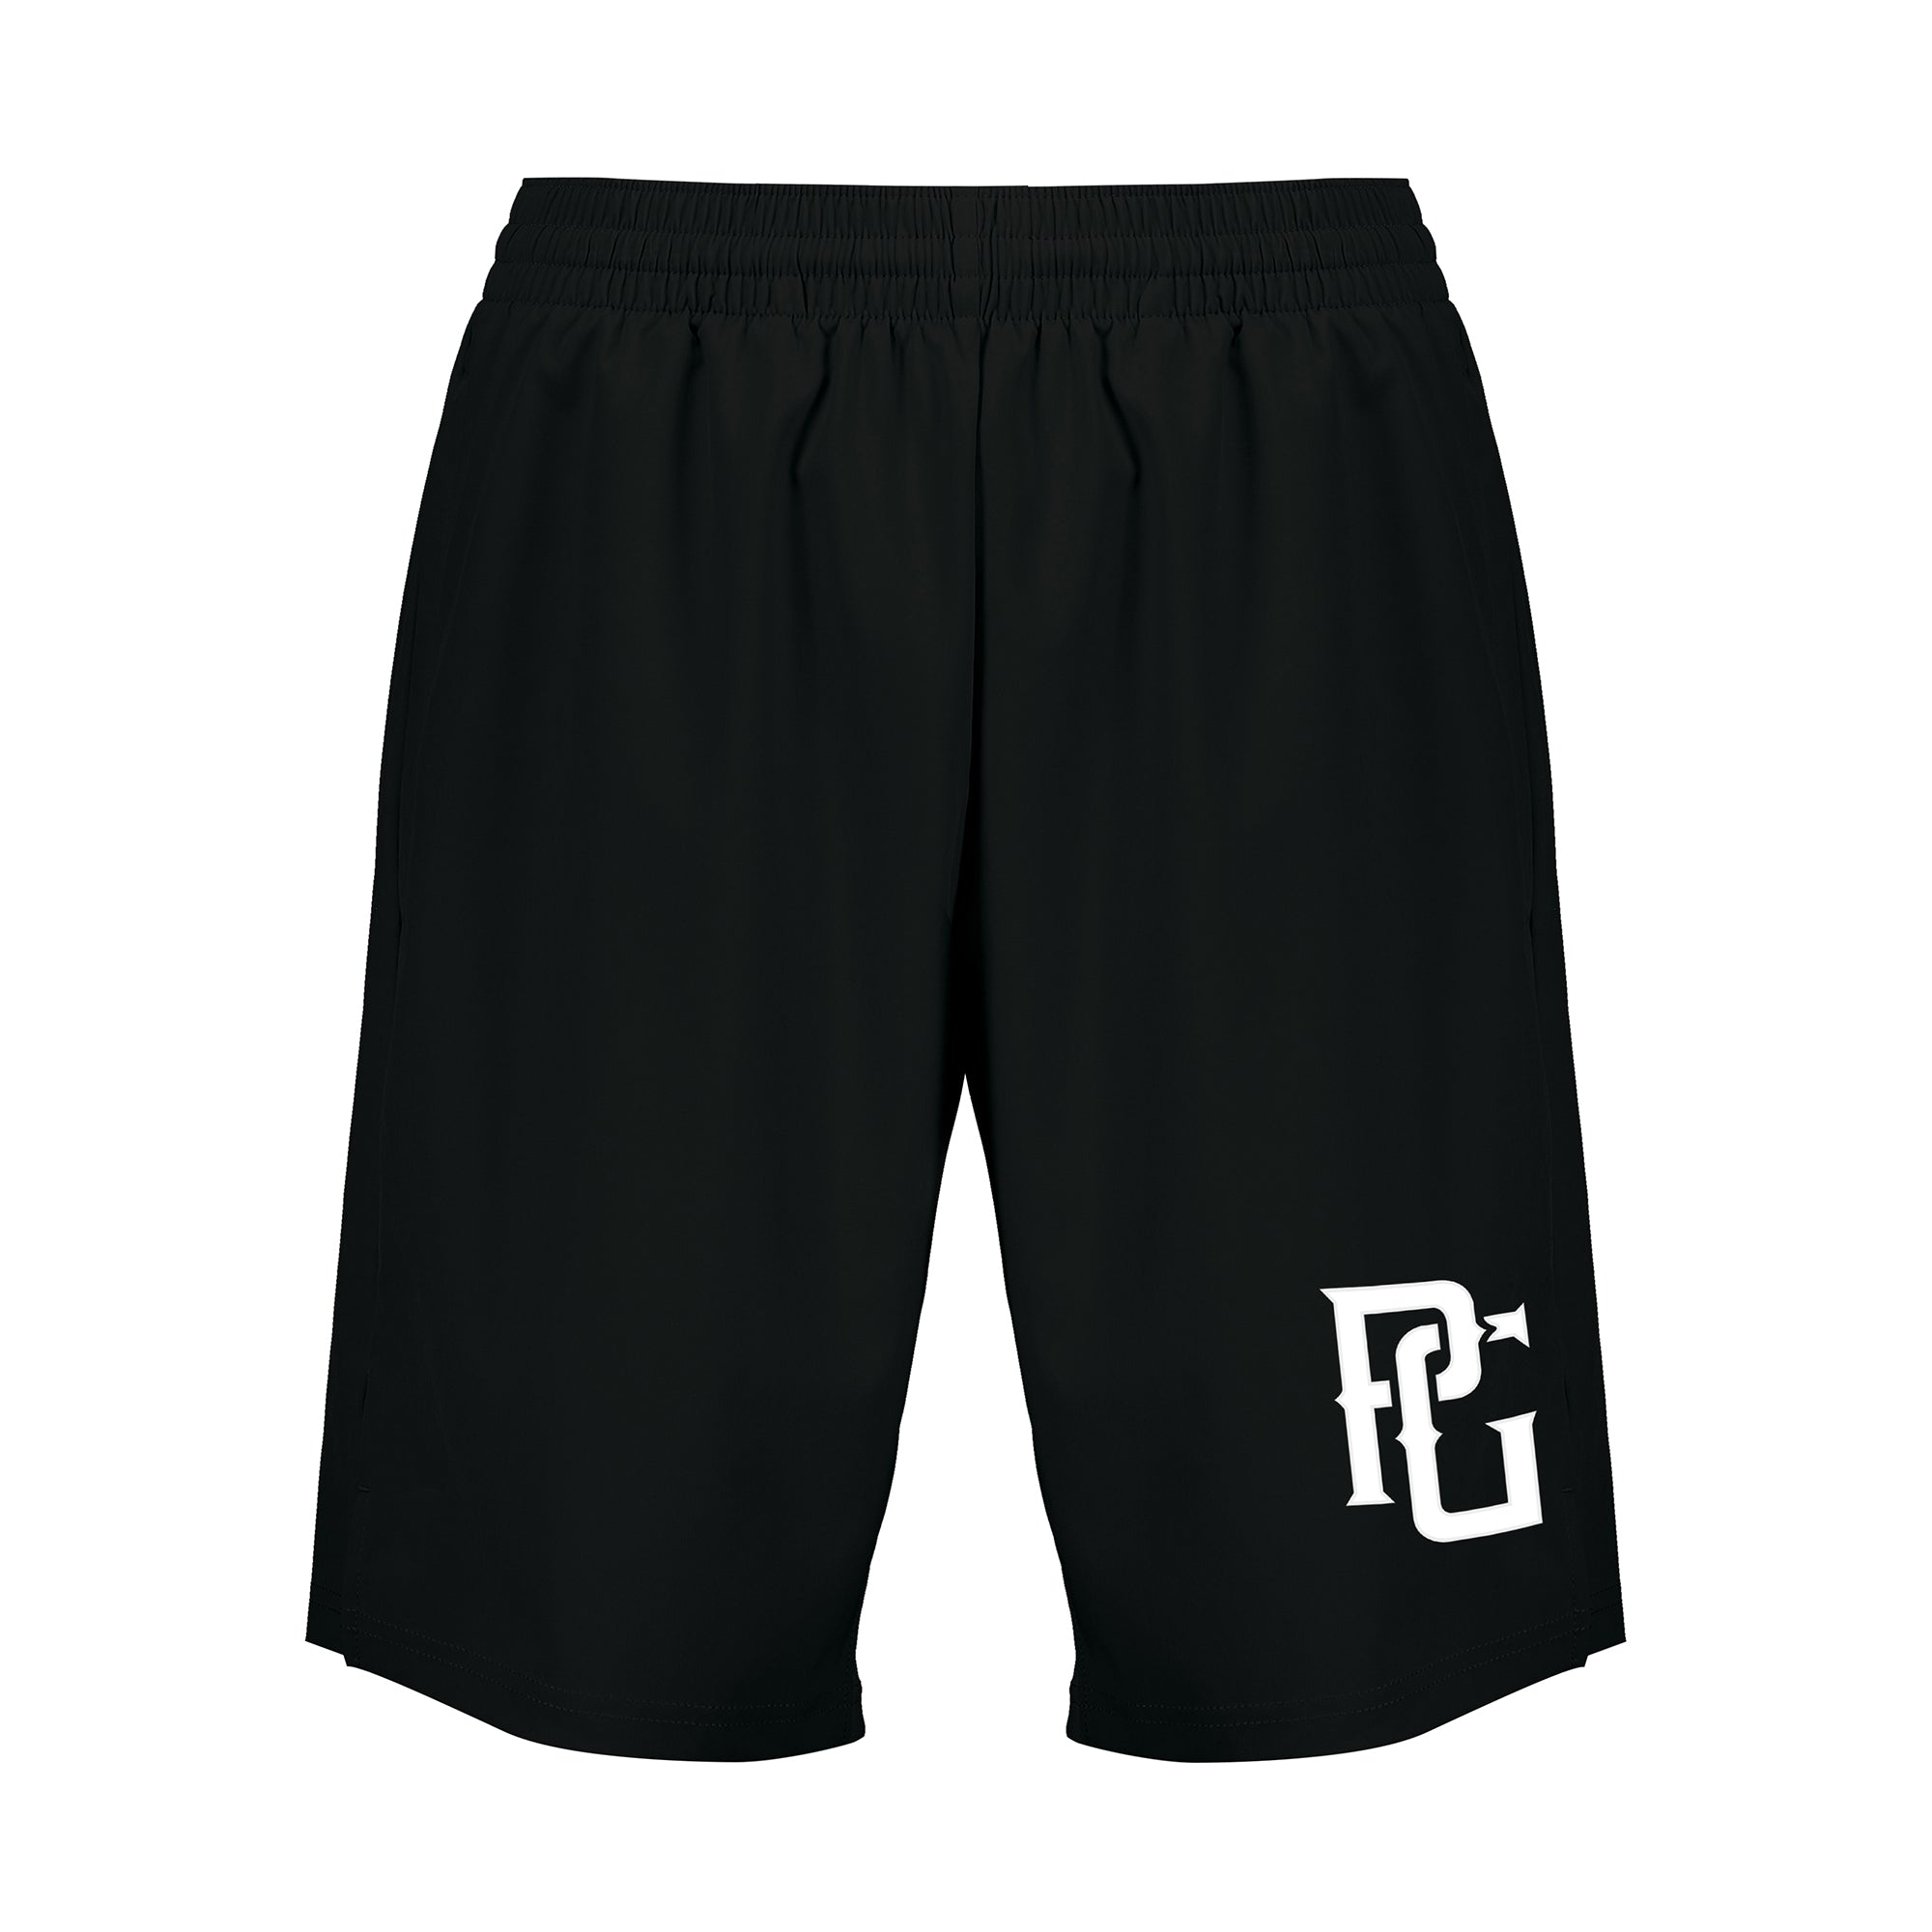 BPL Showcase 2.0 Shorts